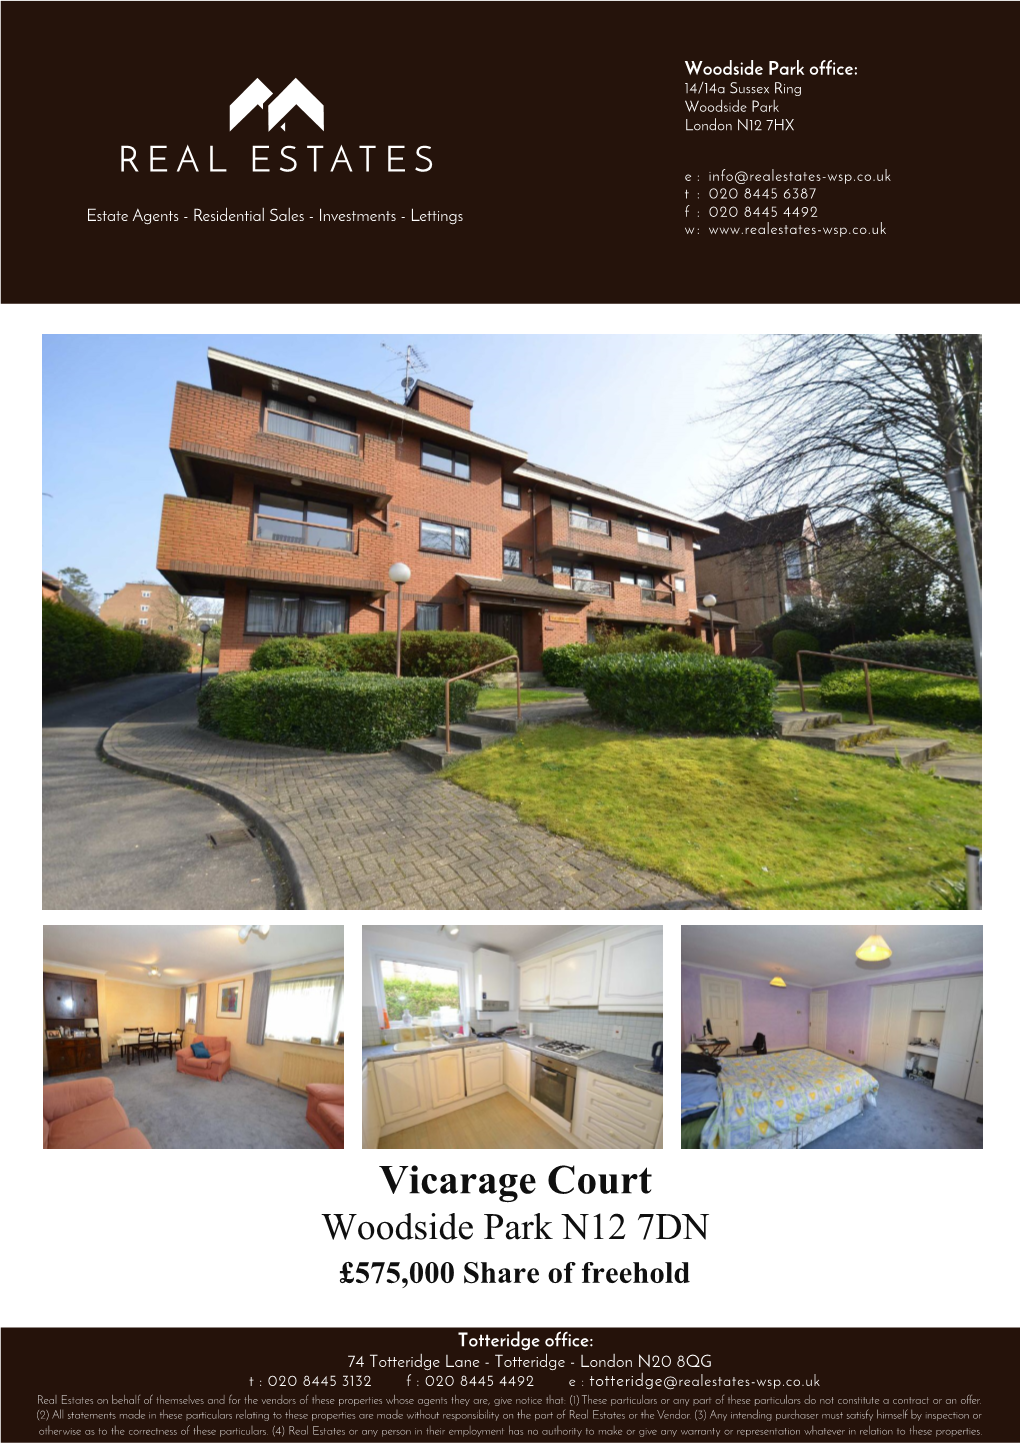 Vicarage Court Woodside Park N12 7DN £575,000 Share of Freehold